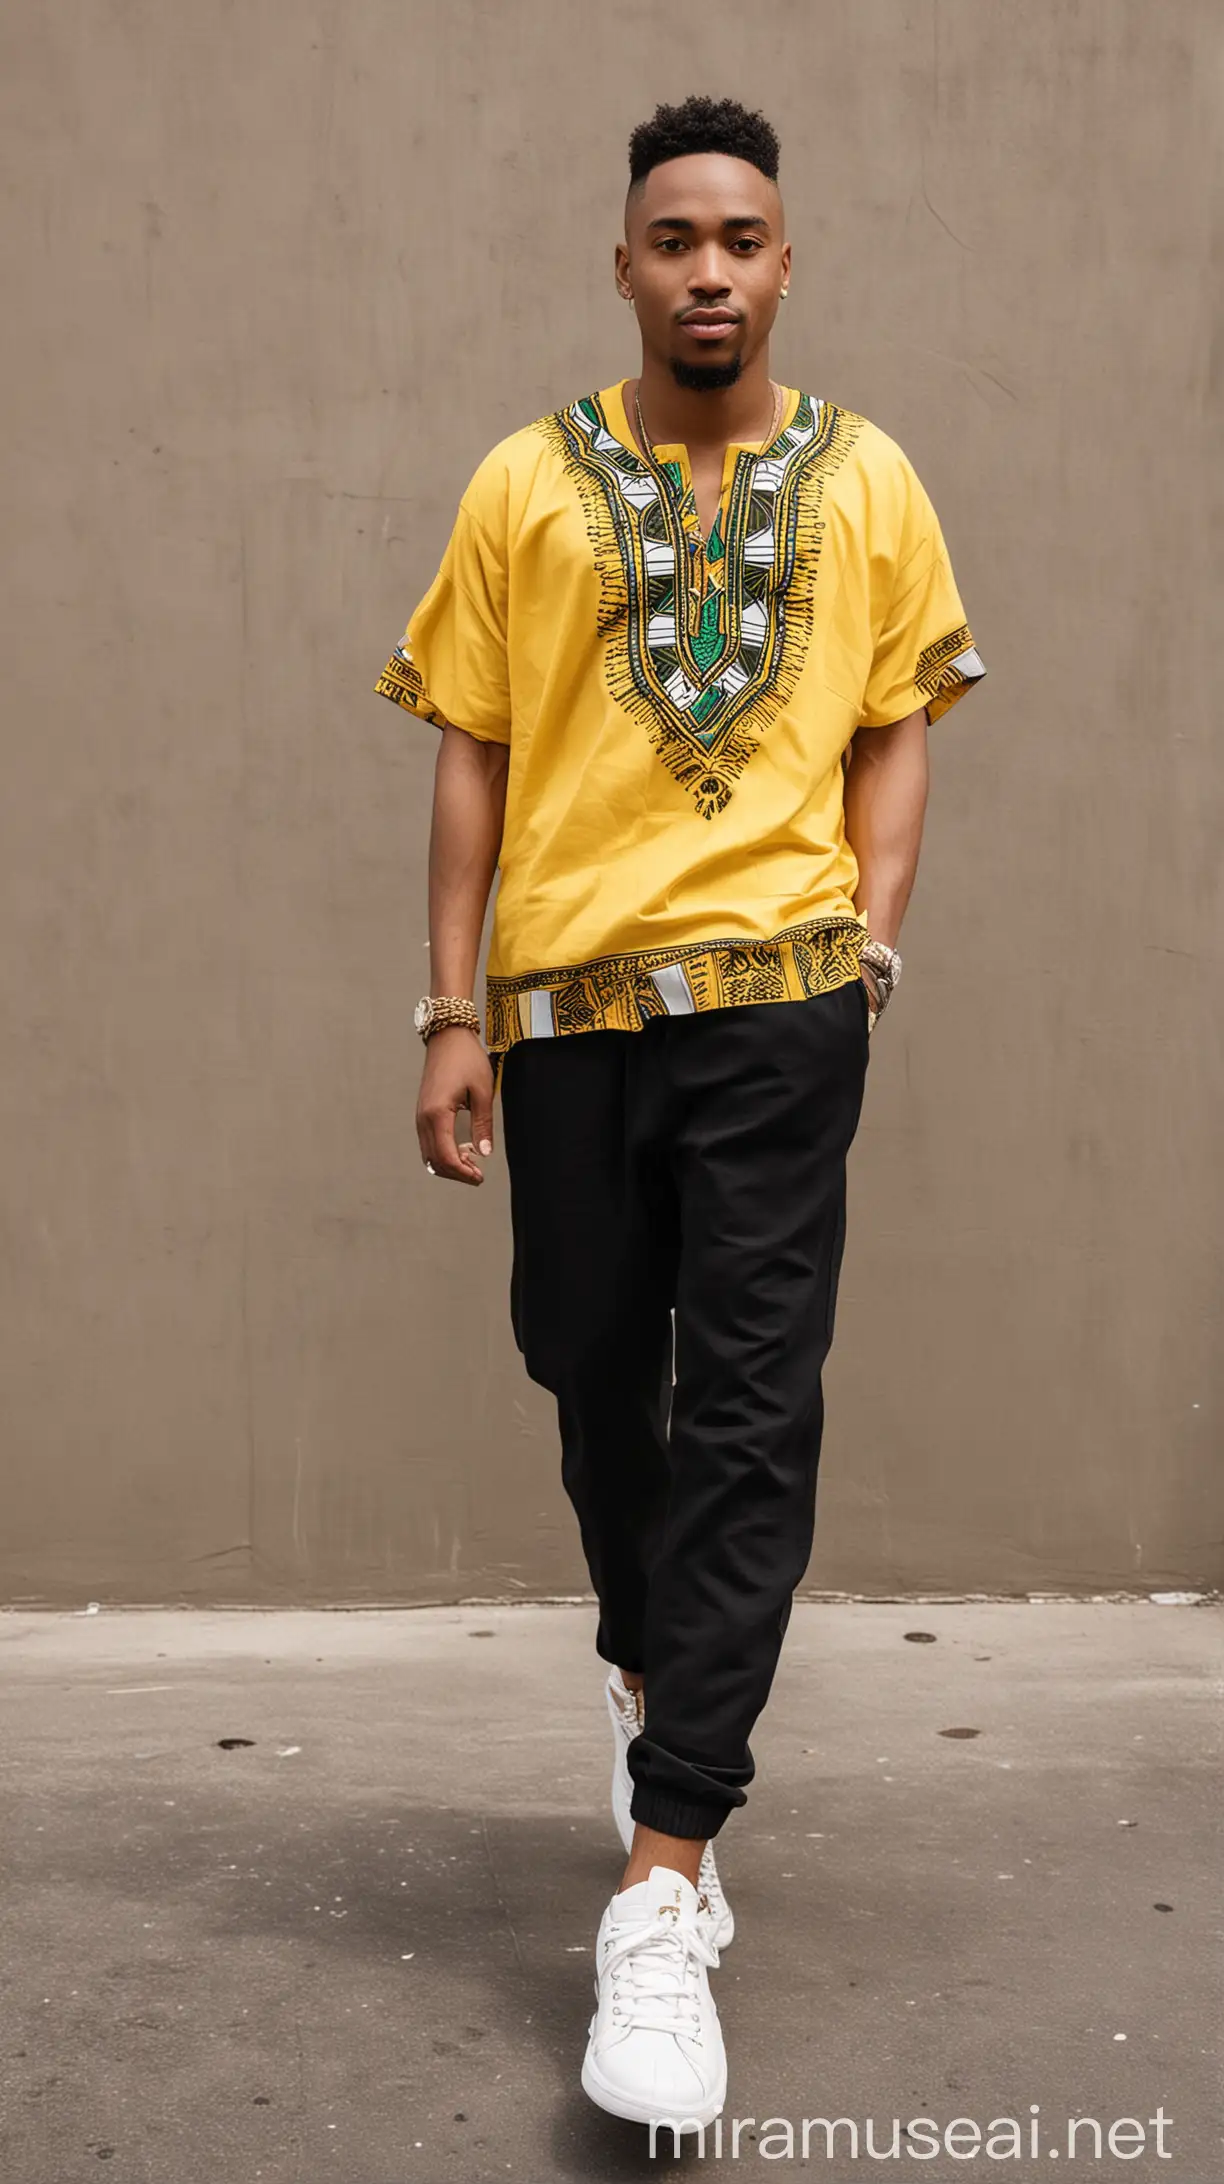 African light skinned man wearing plain yellow Dashiki shirt and black Pants and white sneakers